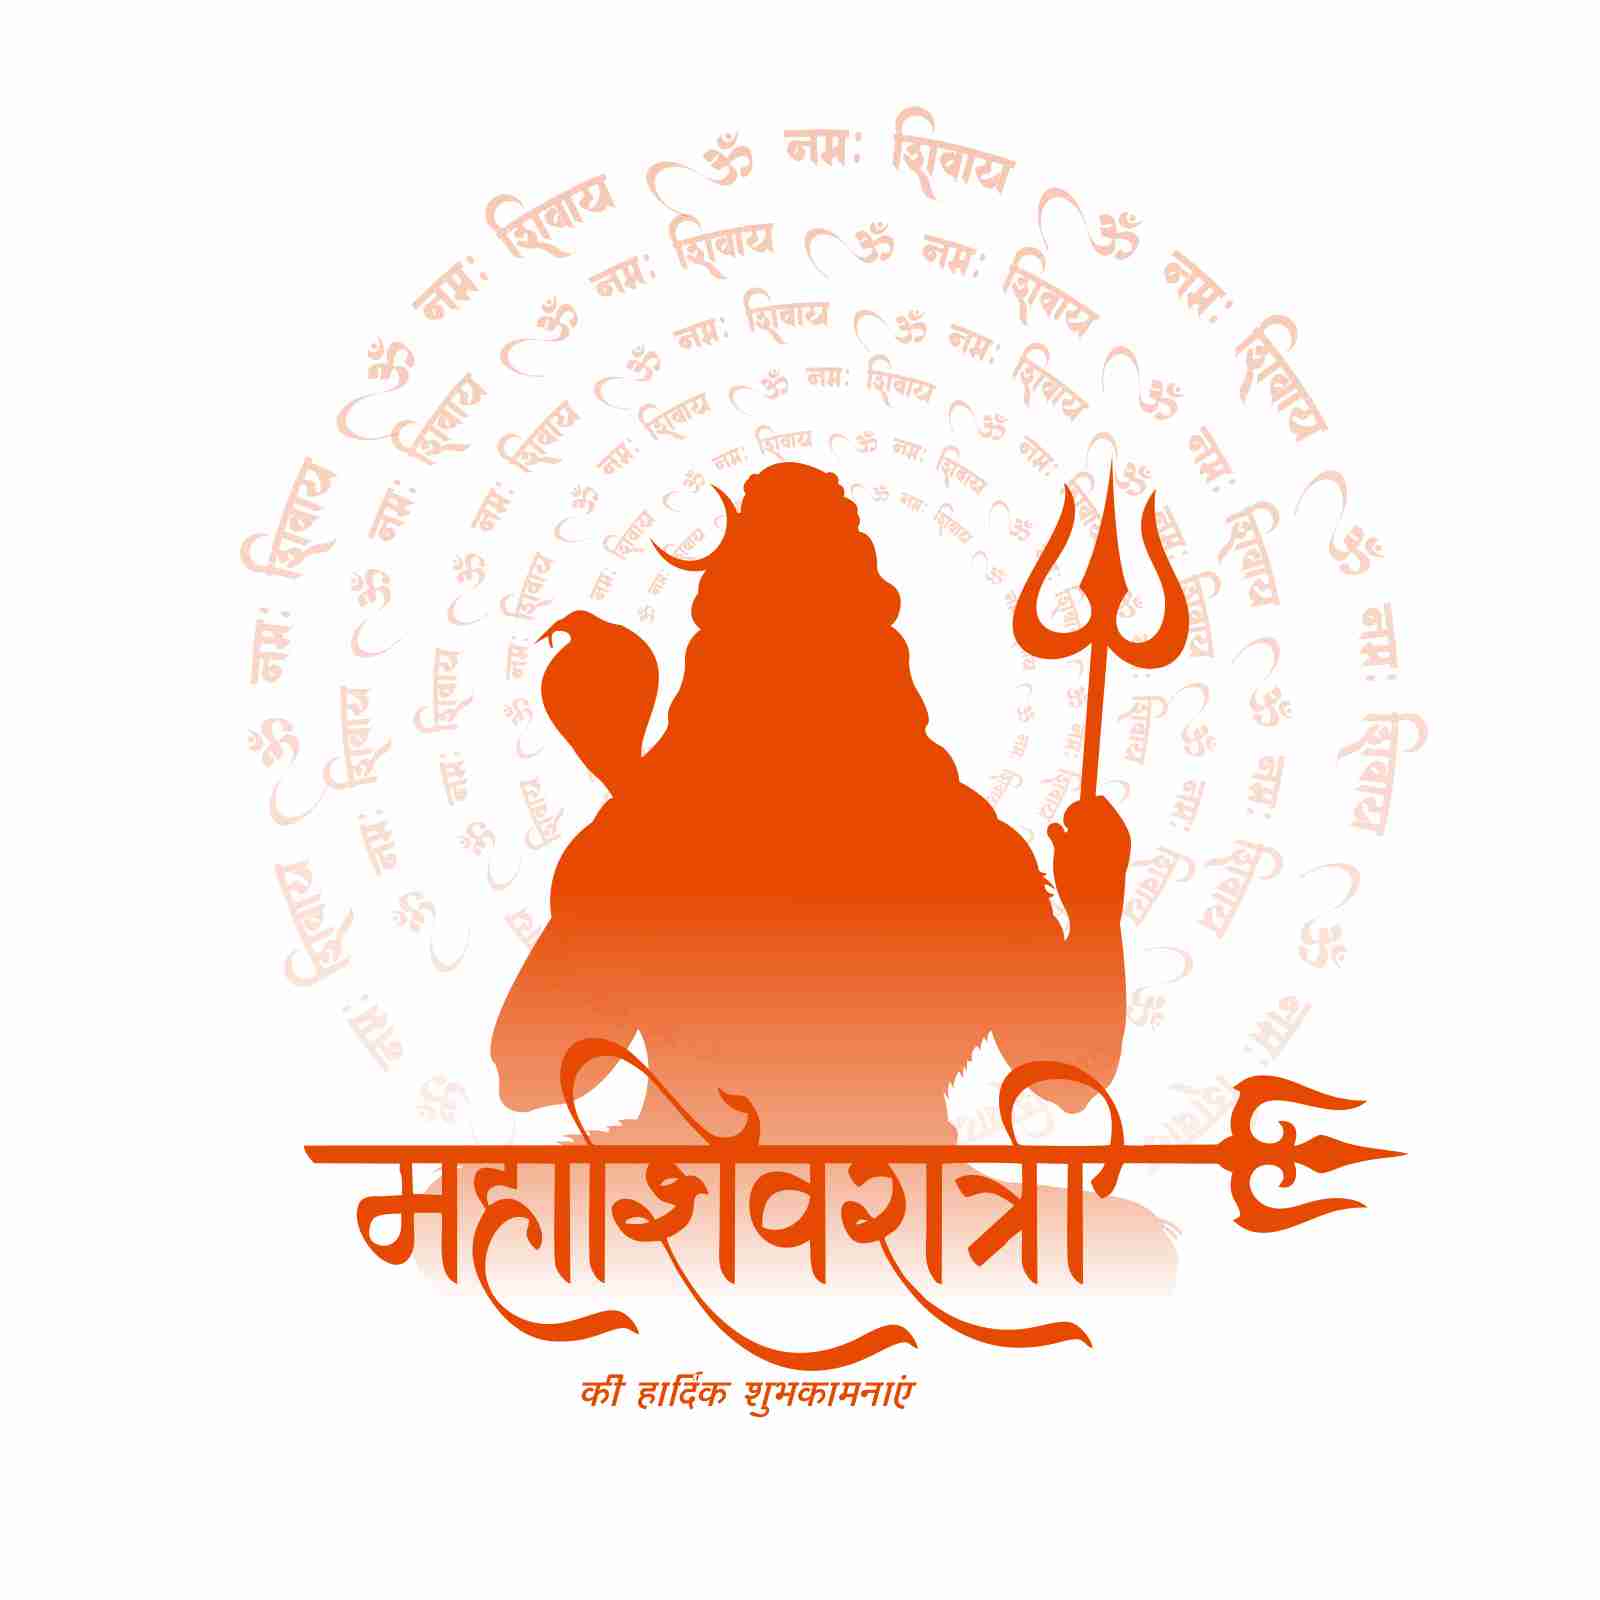 Happy Maha Shivratri design, shiv ji vector image 